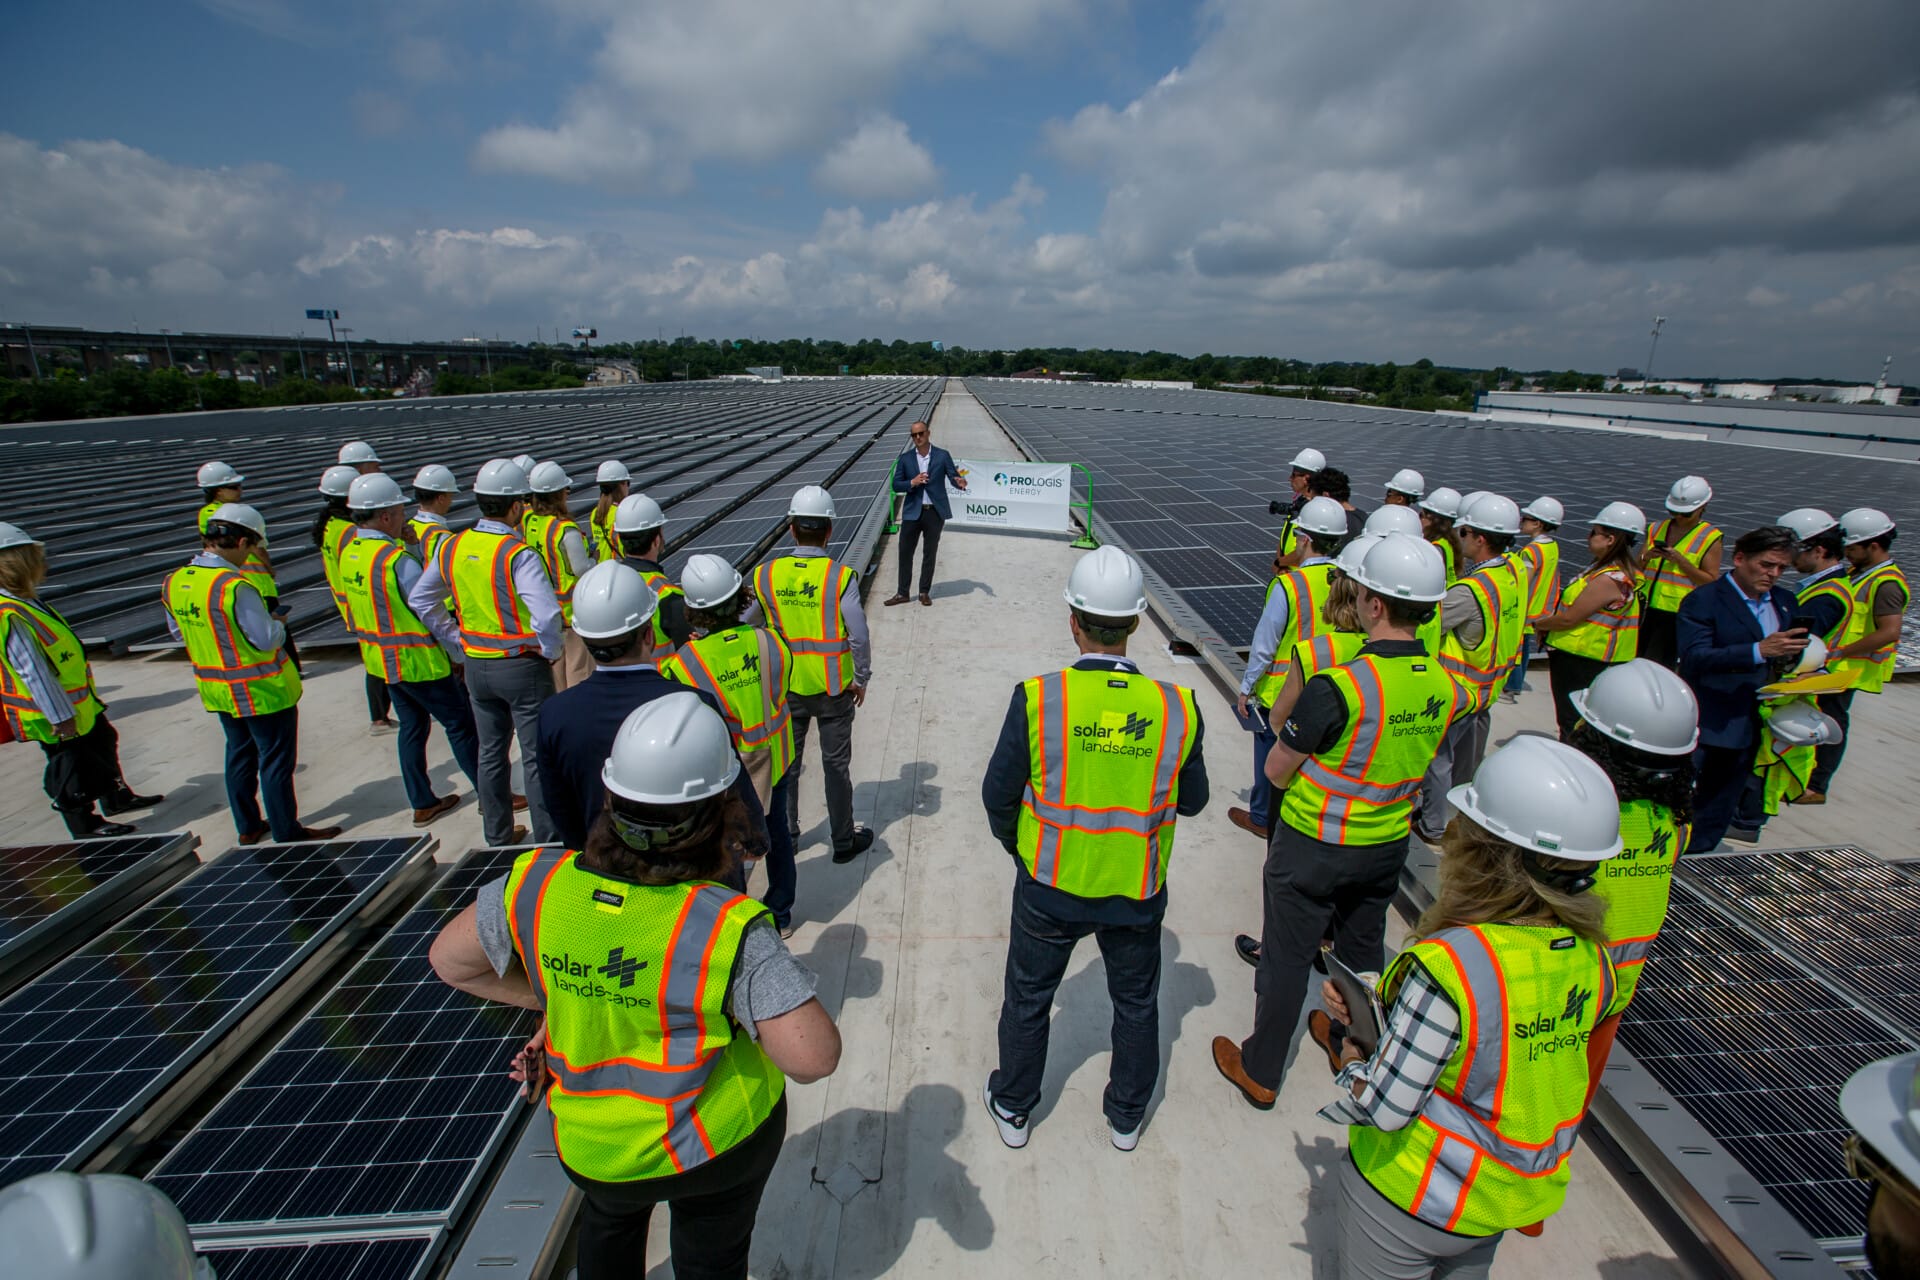 Solar Landscape, Prologis Partnership Shines at Rooftop Community Solar Demonstration